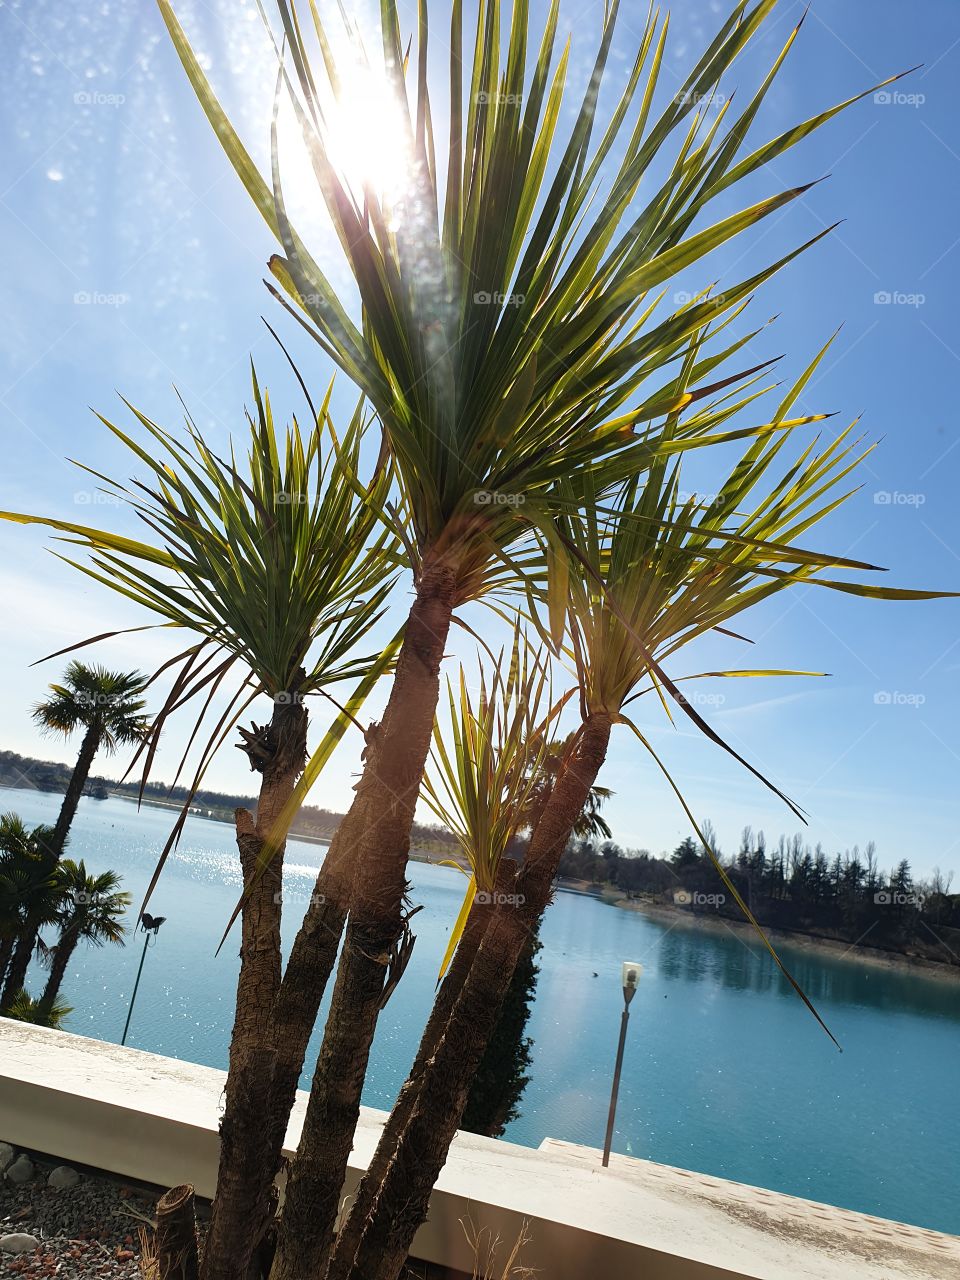 sunshine and palm trees